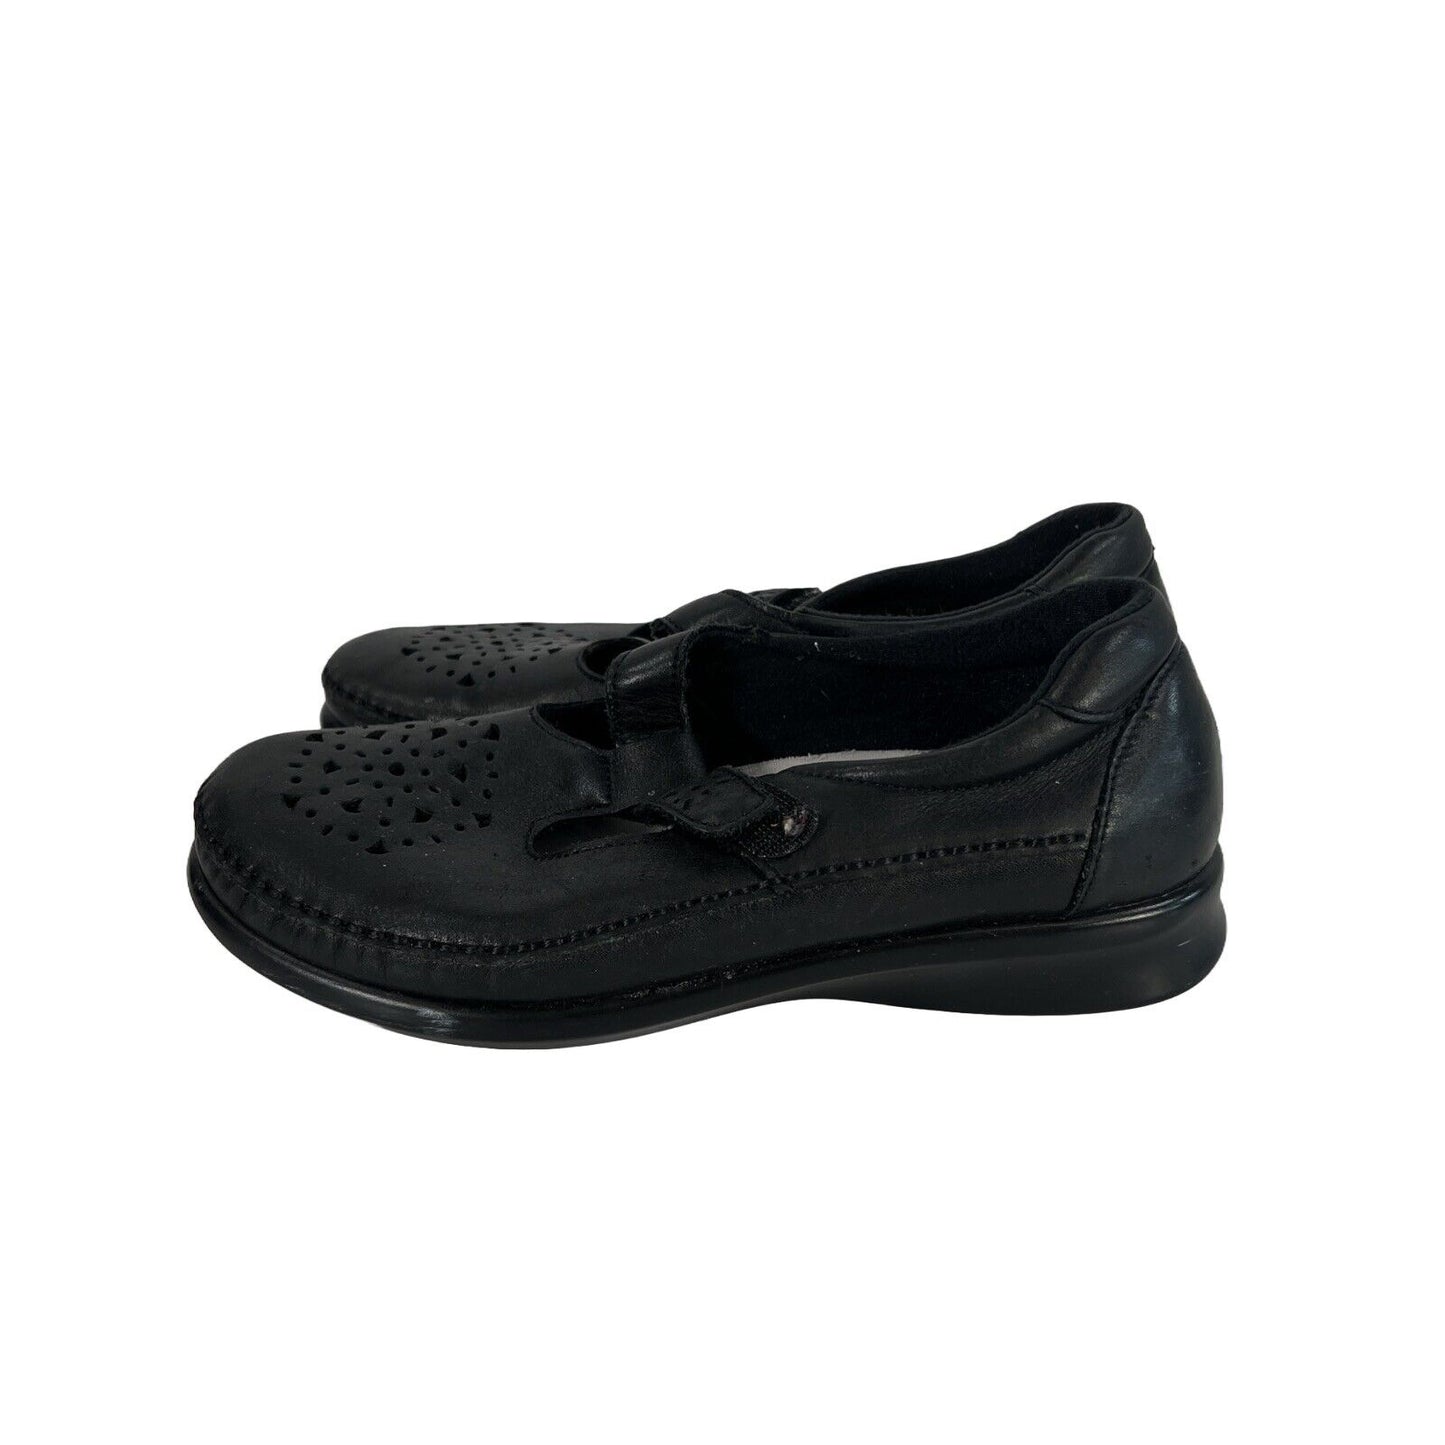 SAS Women's Black Leather Tripad Comfort Shoes - 6.5